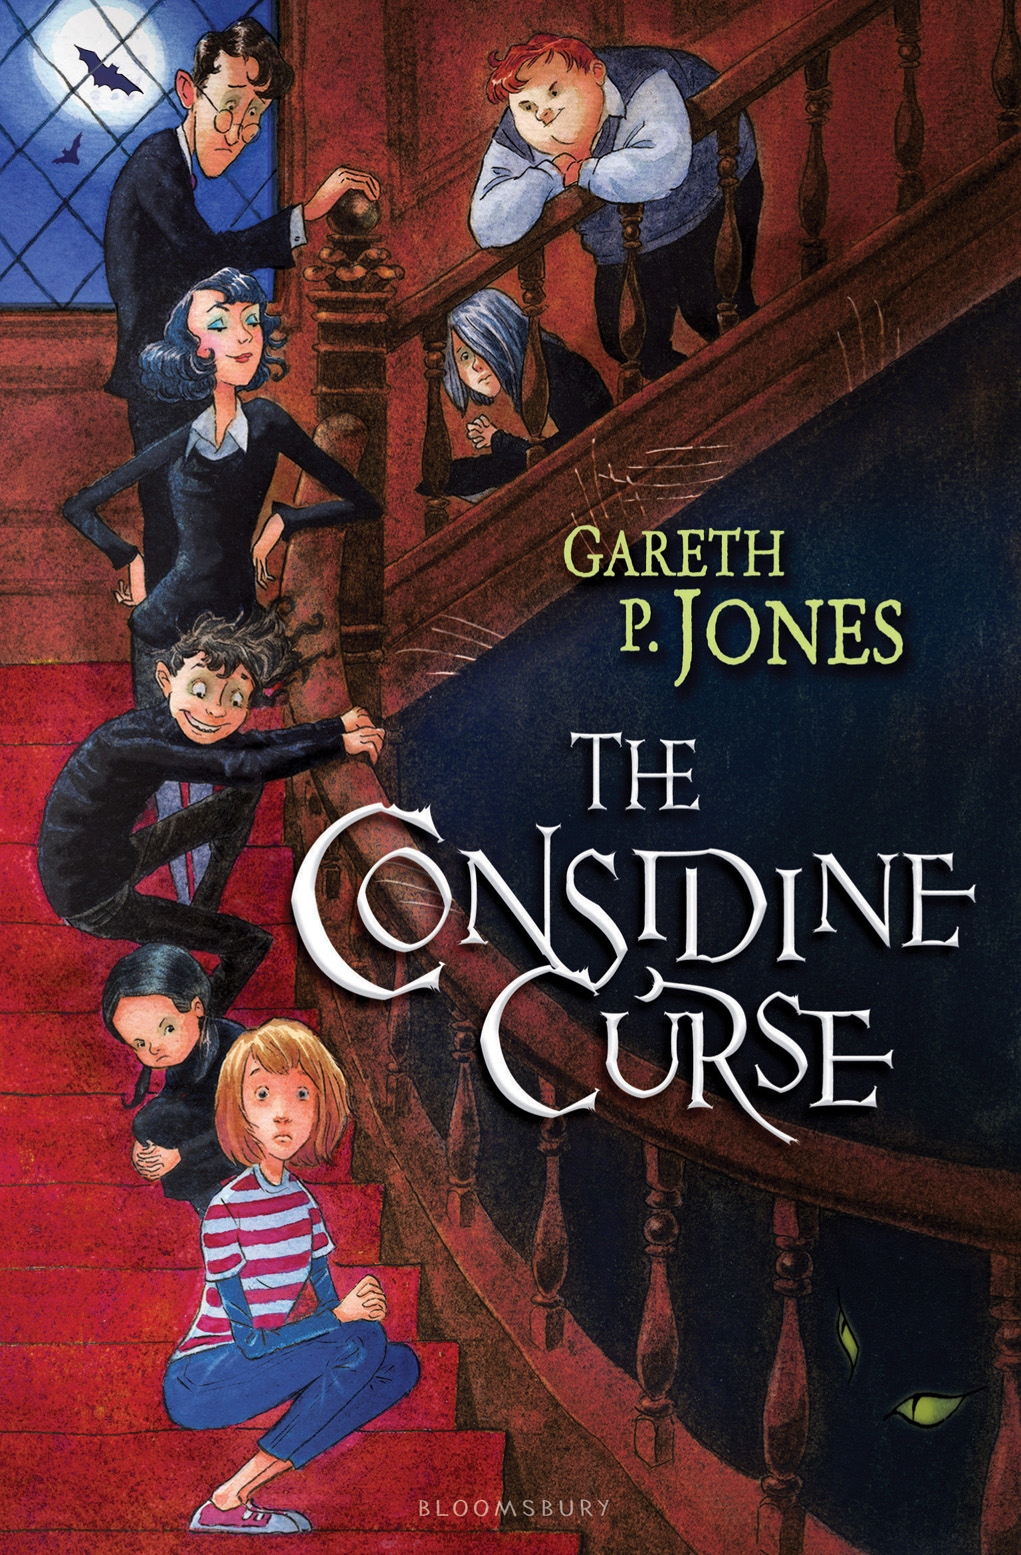 The Considine Curse (2011) by Gareth P. Jones